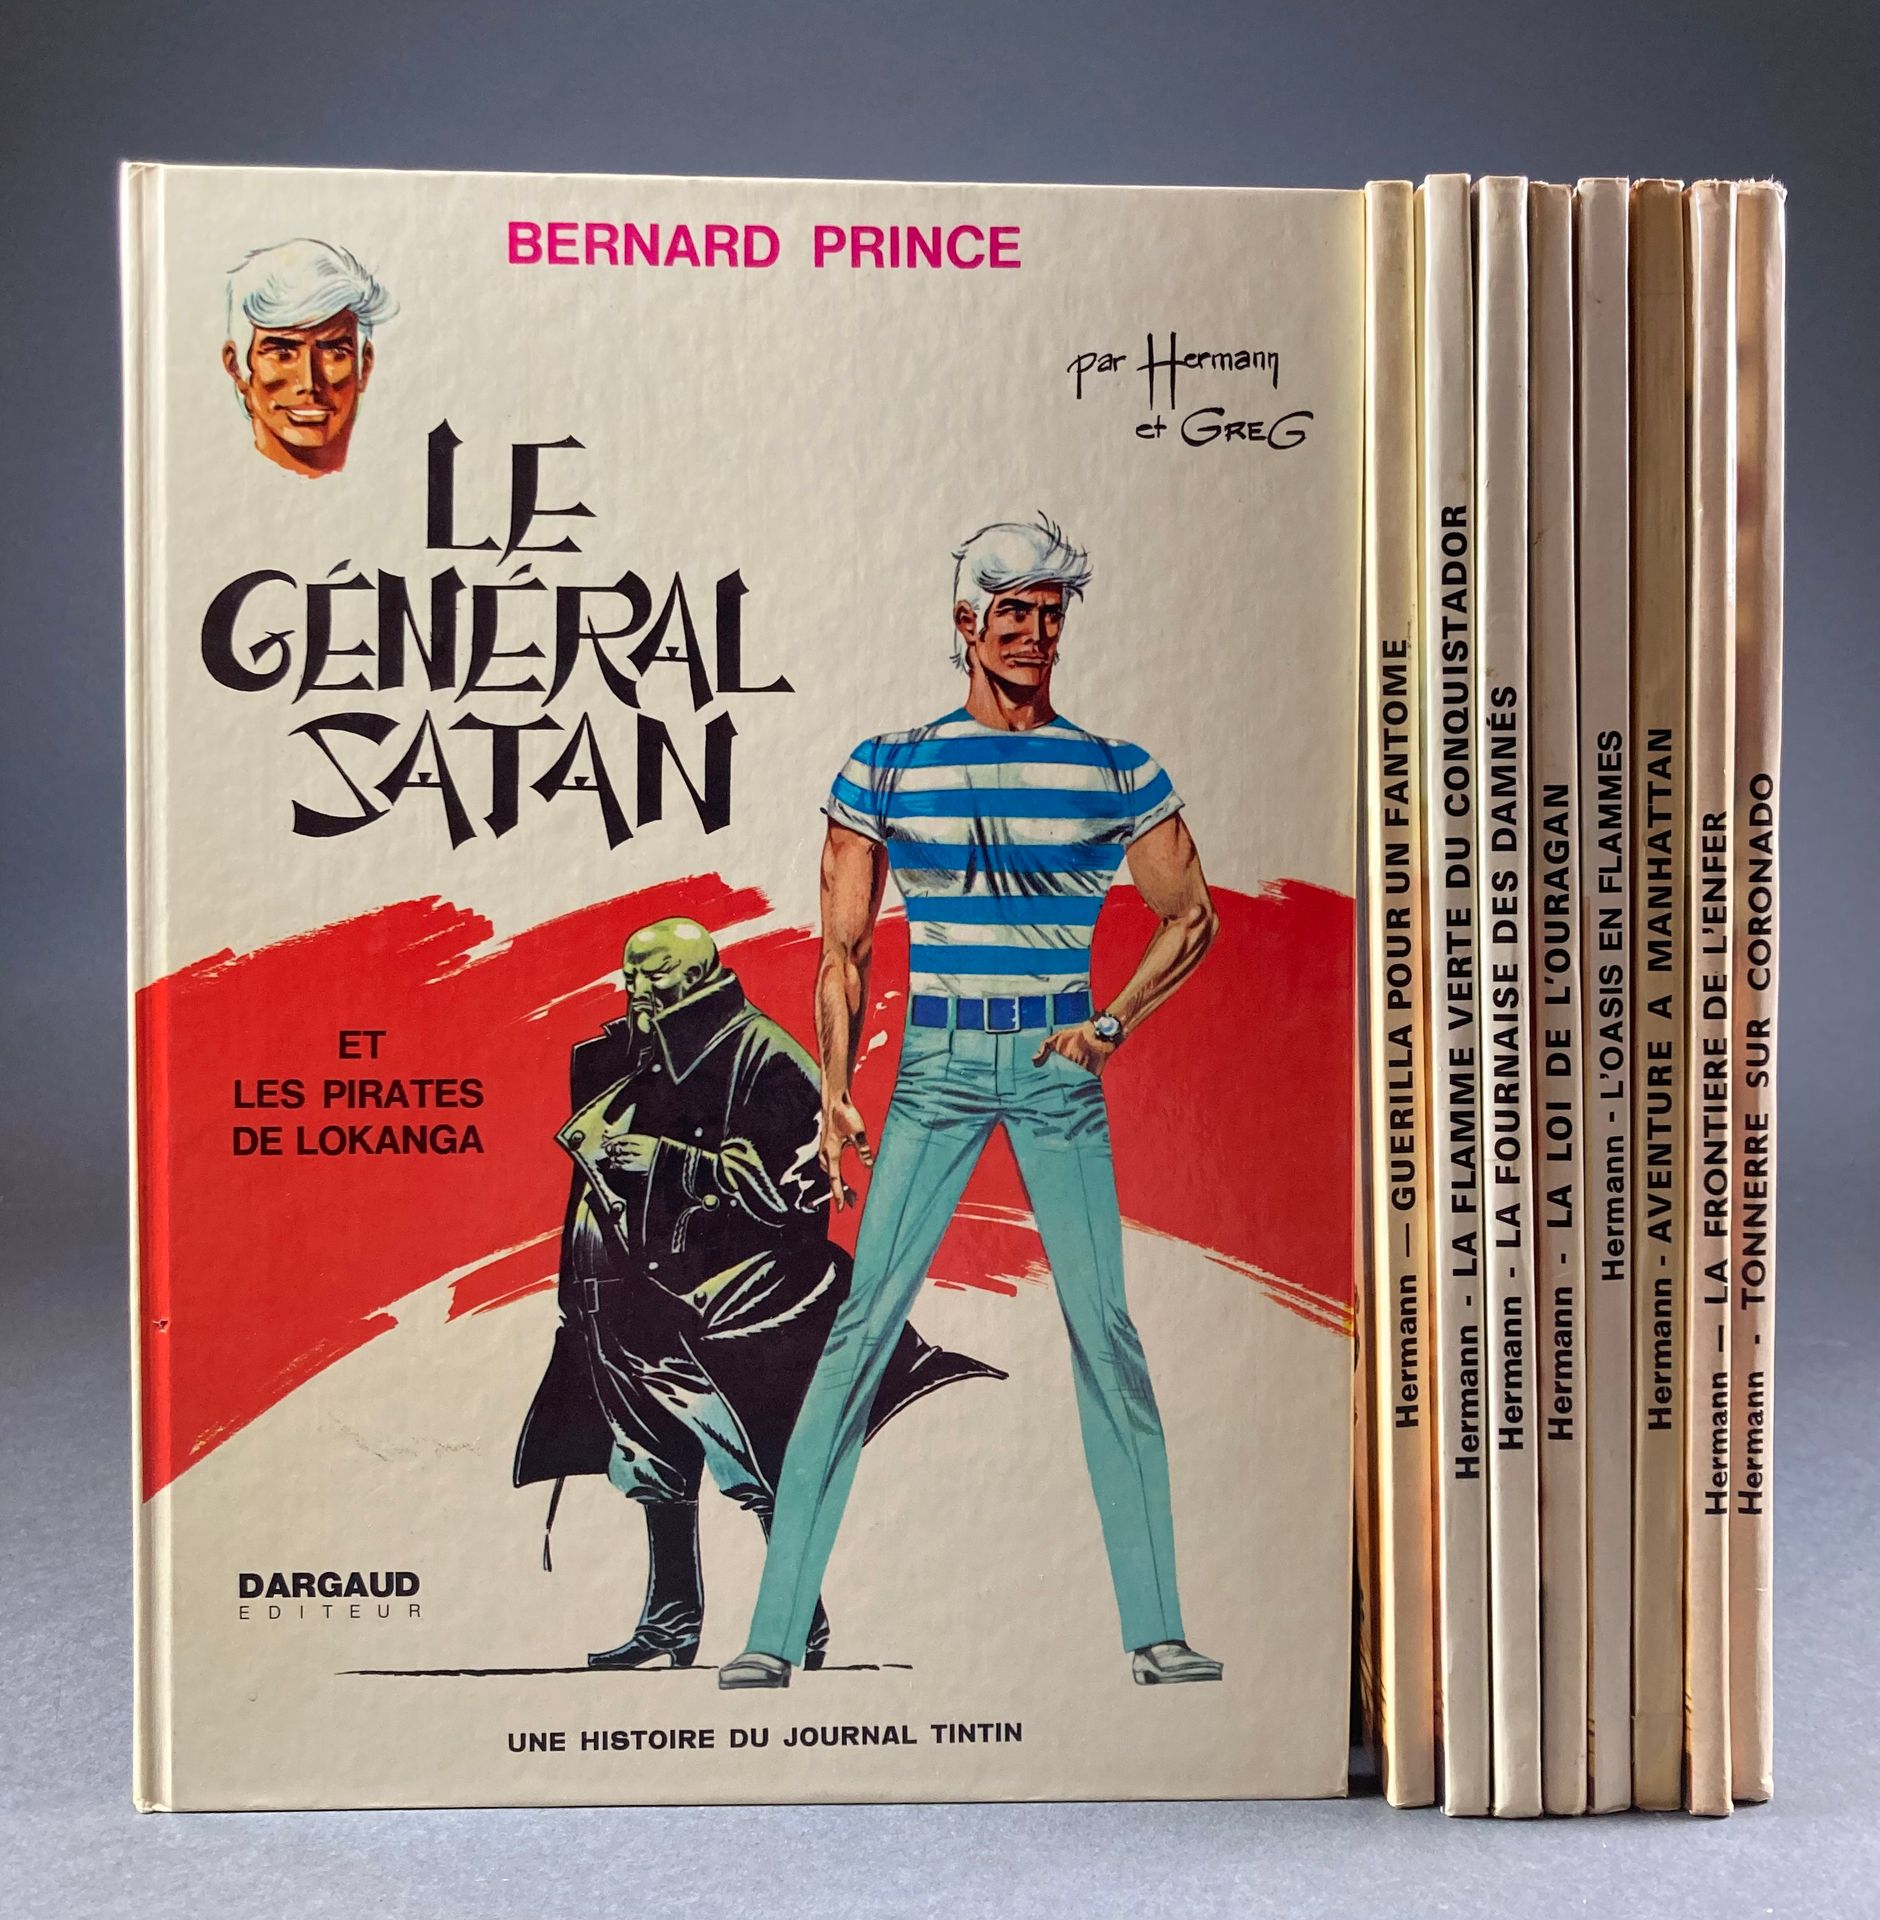 HERMANN - Bernard Prince Volumes 1 to 9, from General Satan (1971) to Guerilla f&hellip;